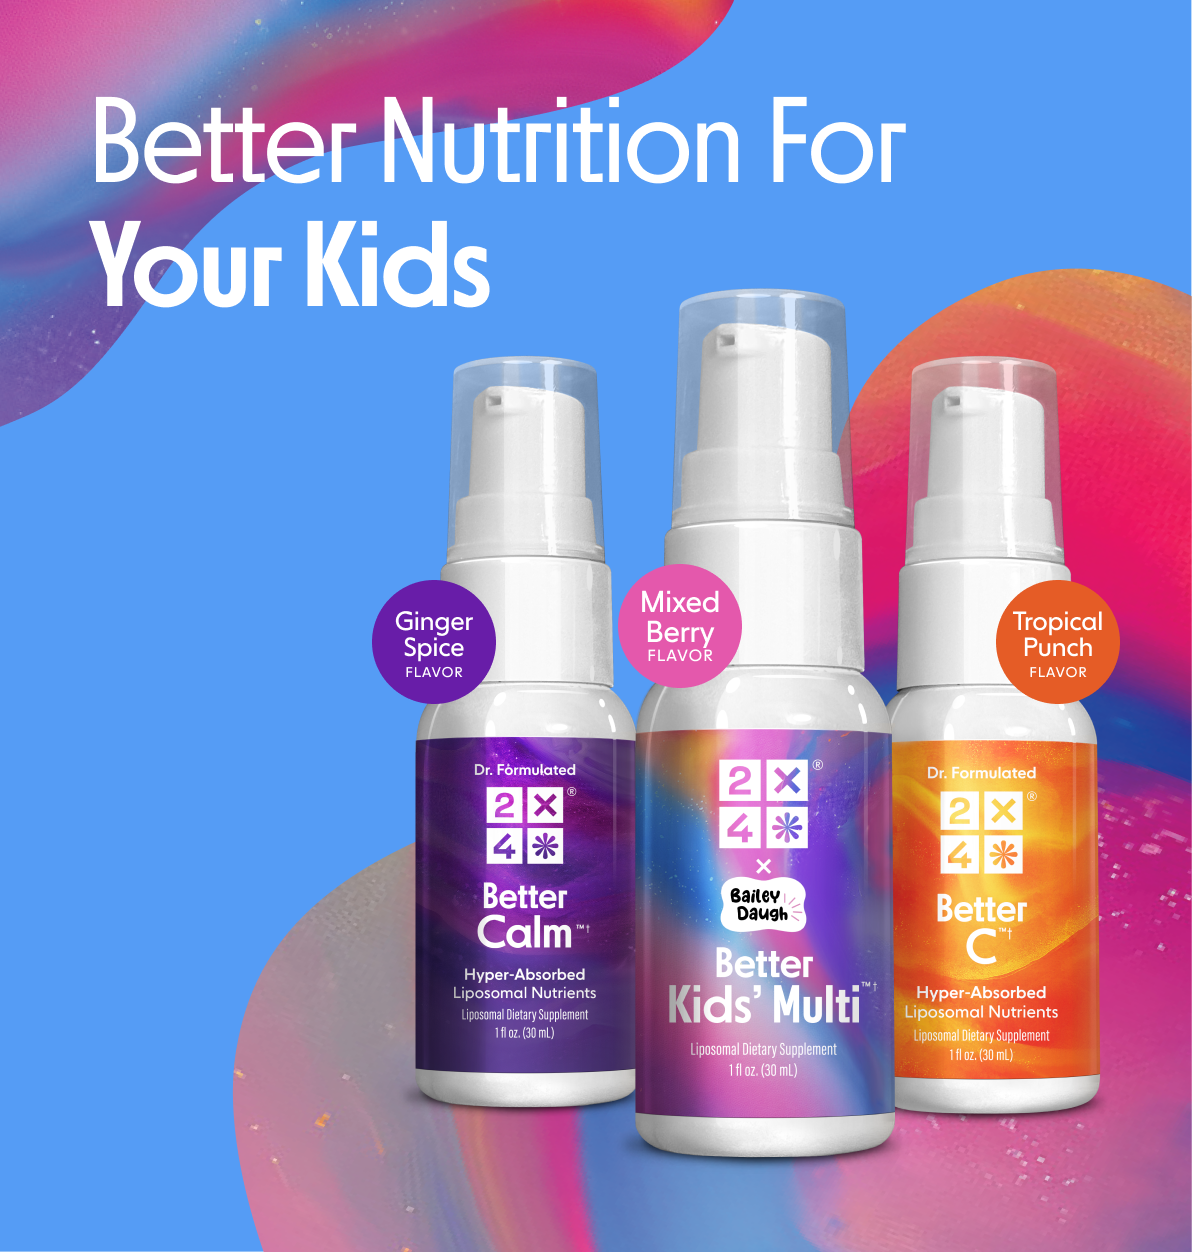 2x4 Better Kids' Nutrition Bundle